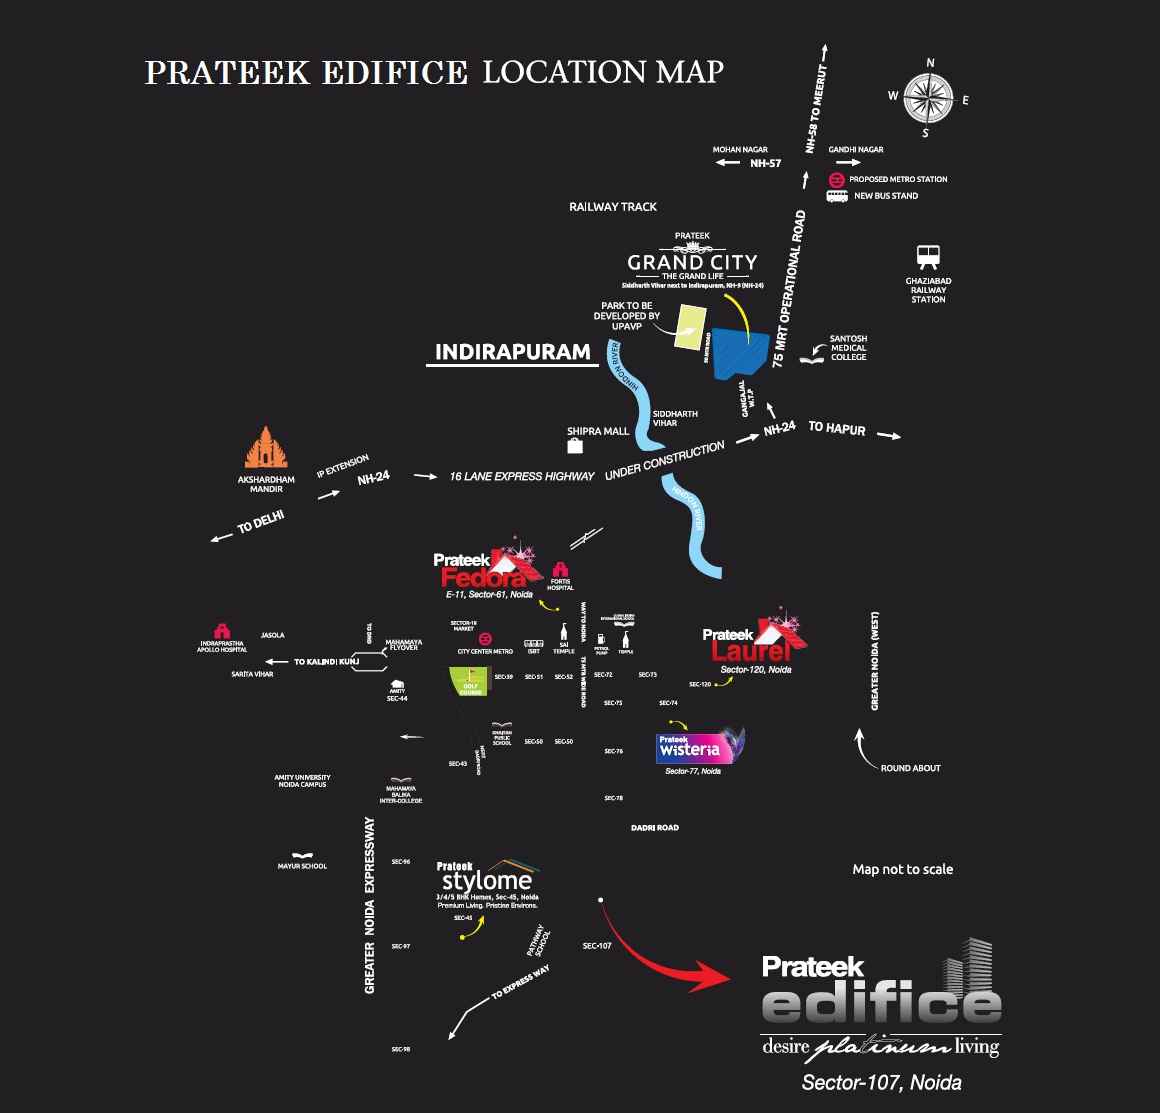 Prateek Edicife location map